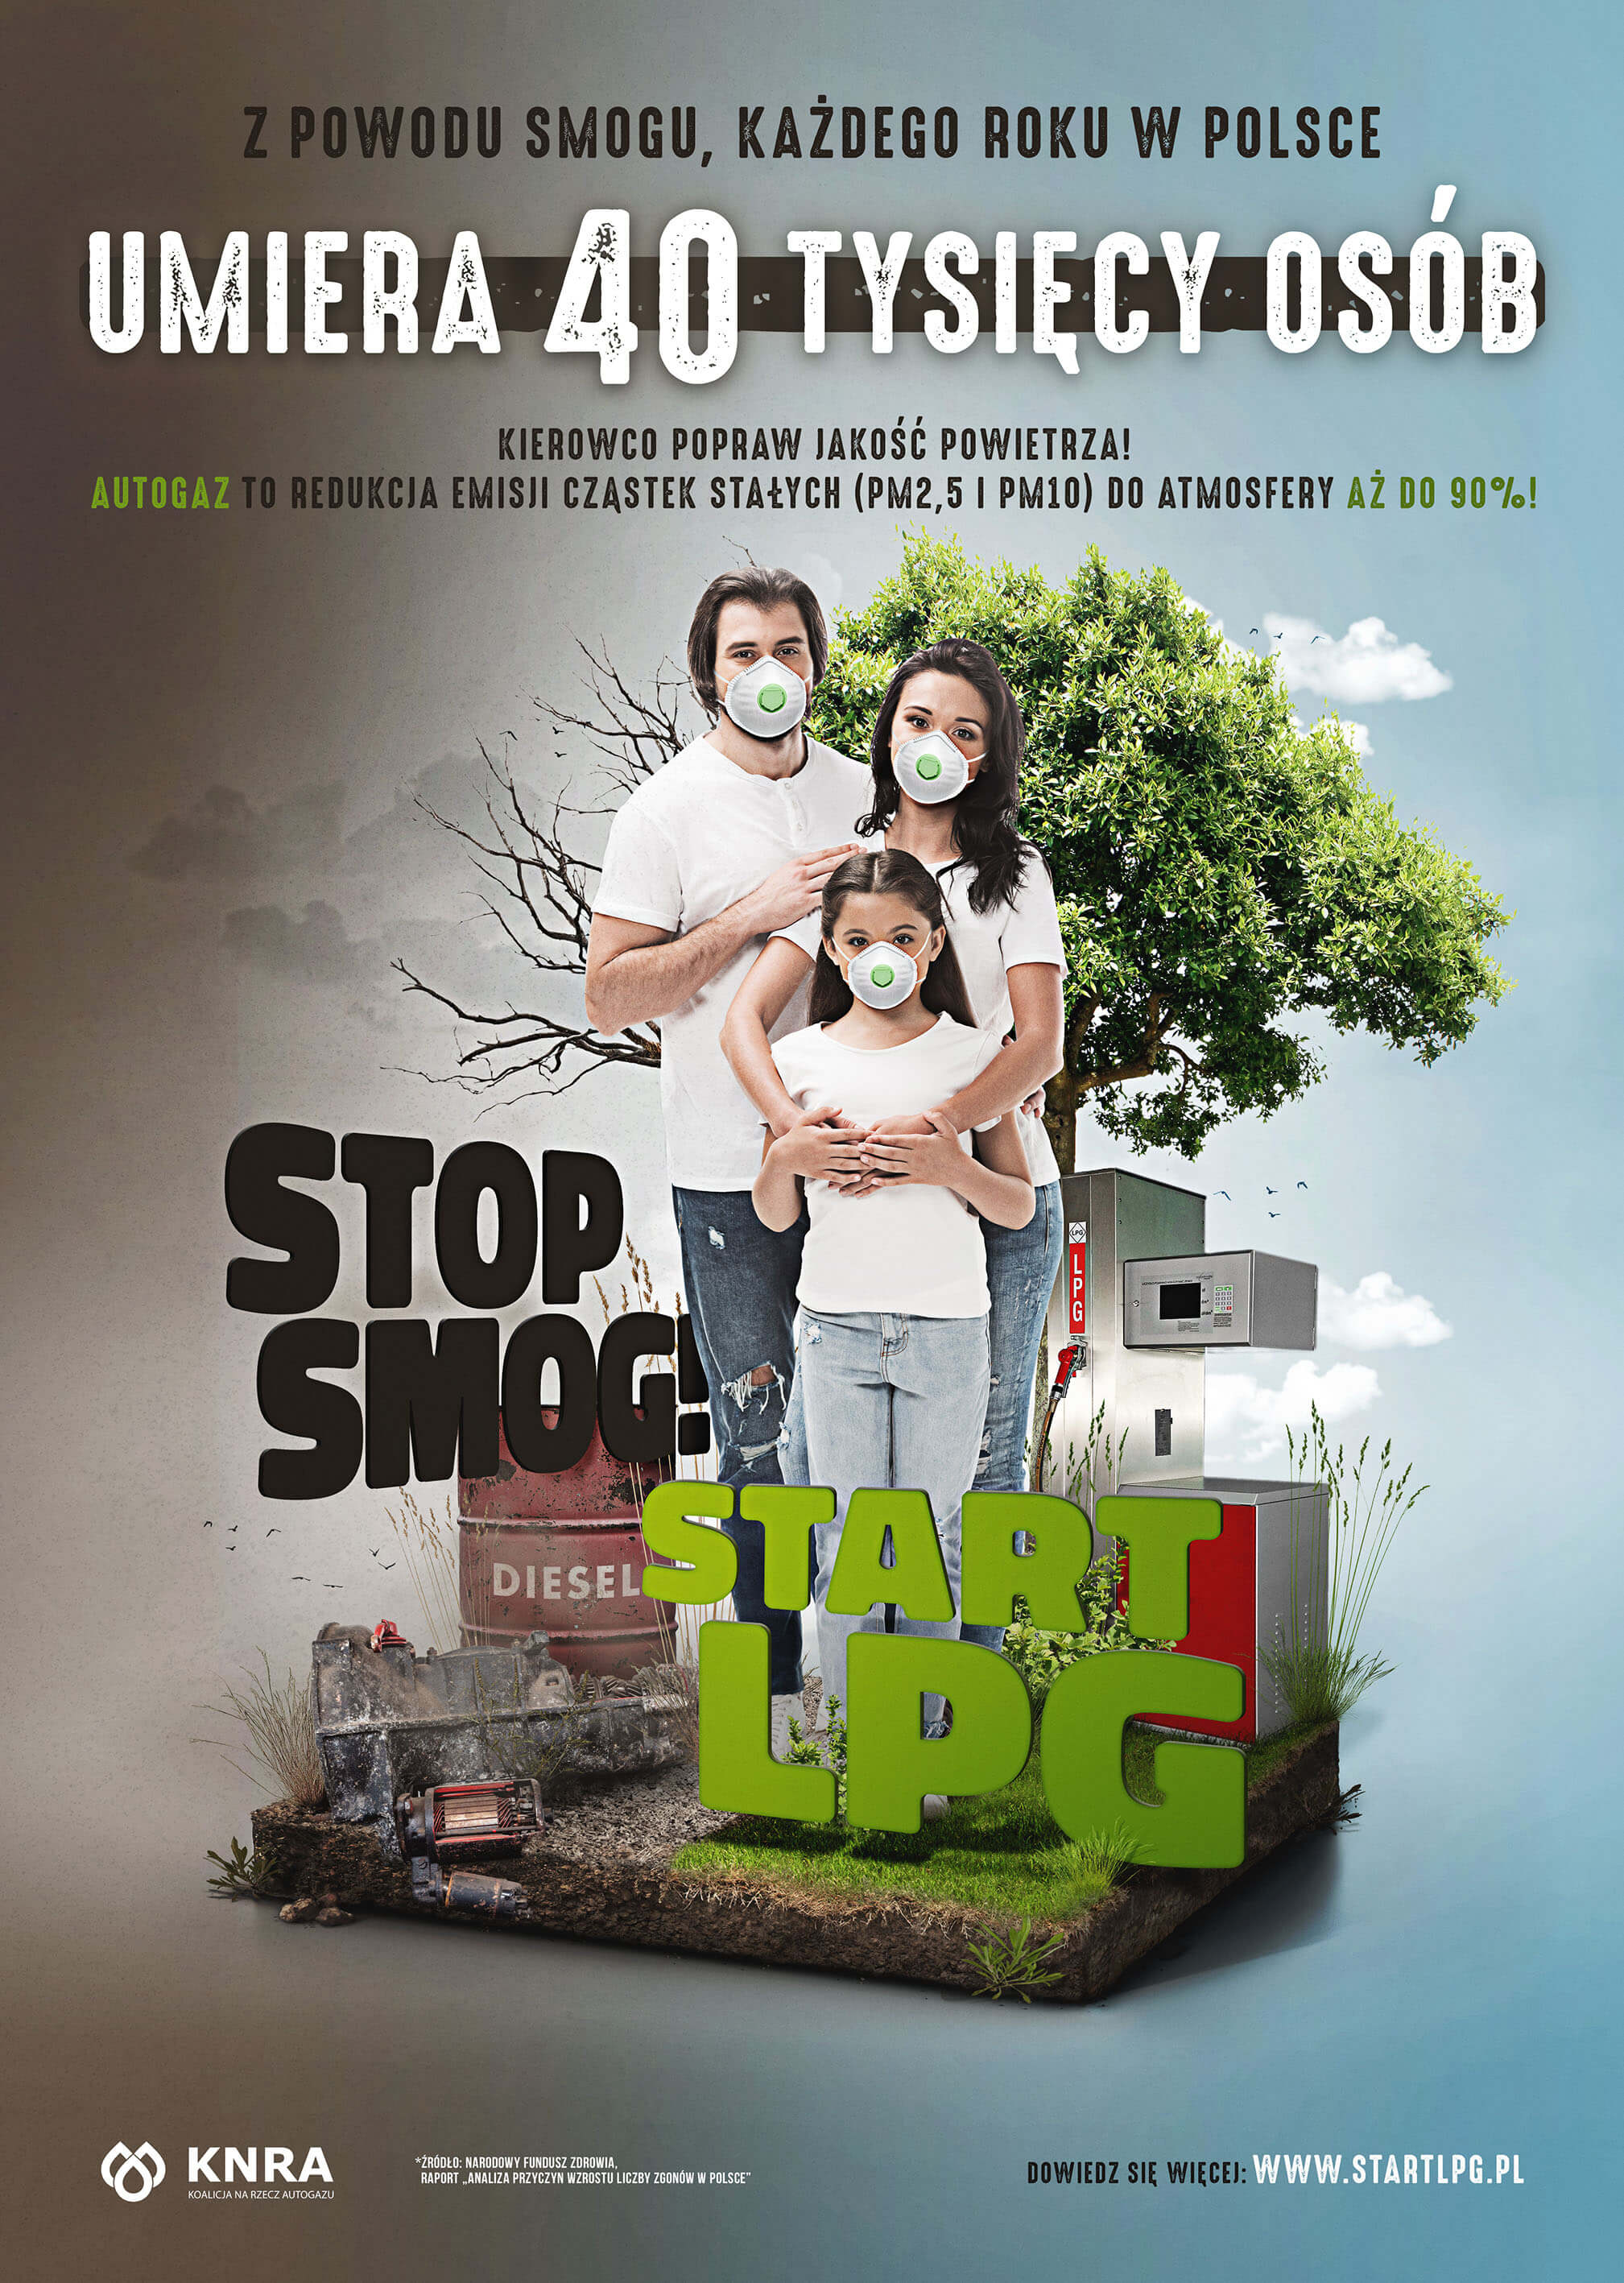 stop smog